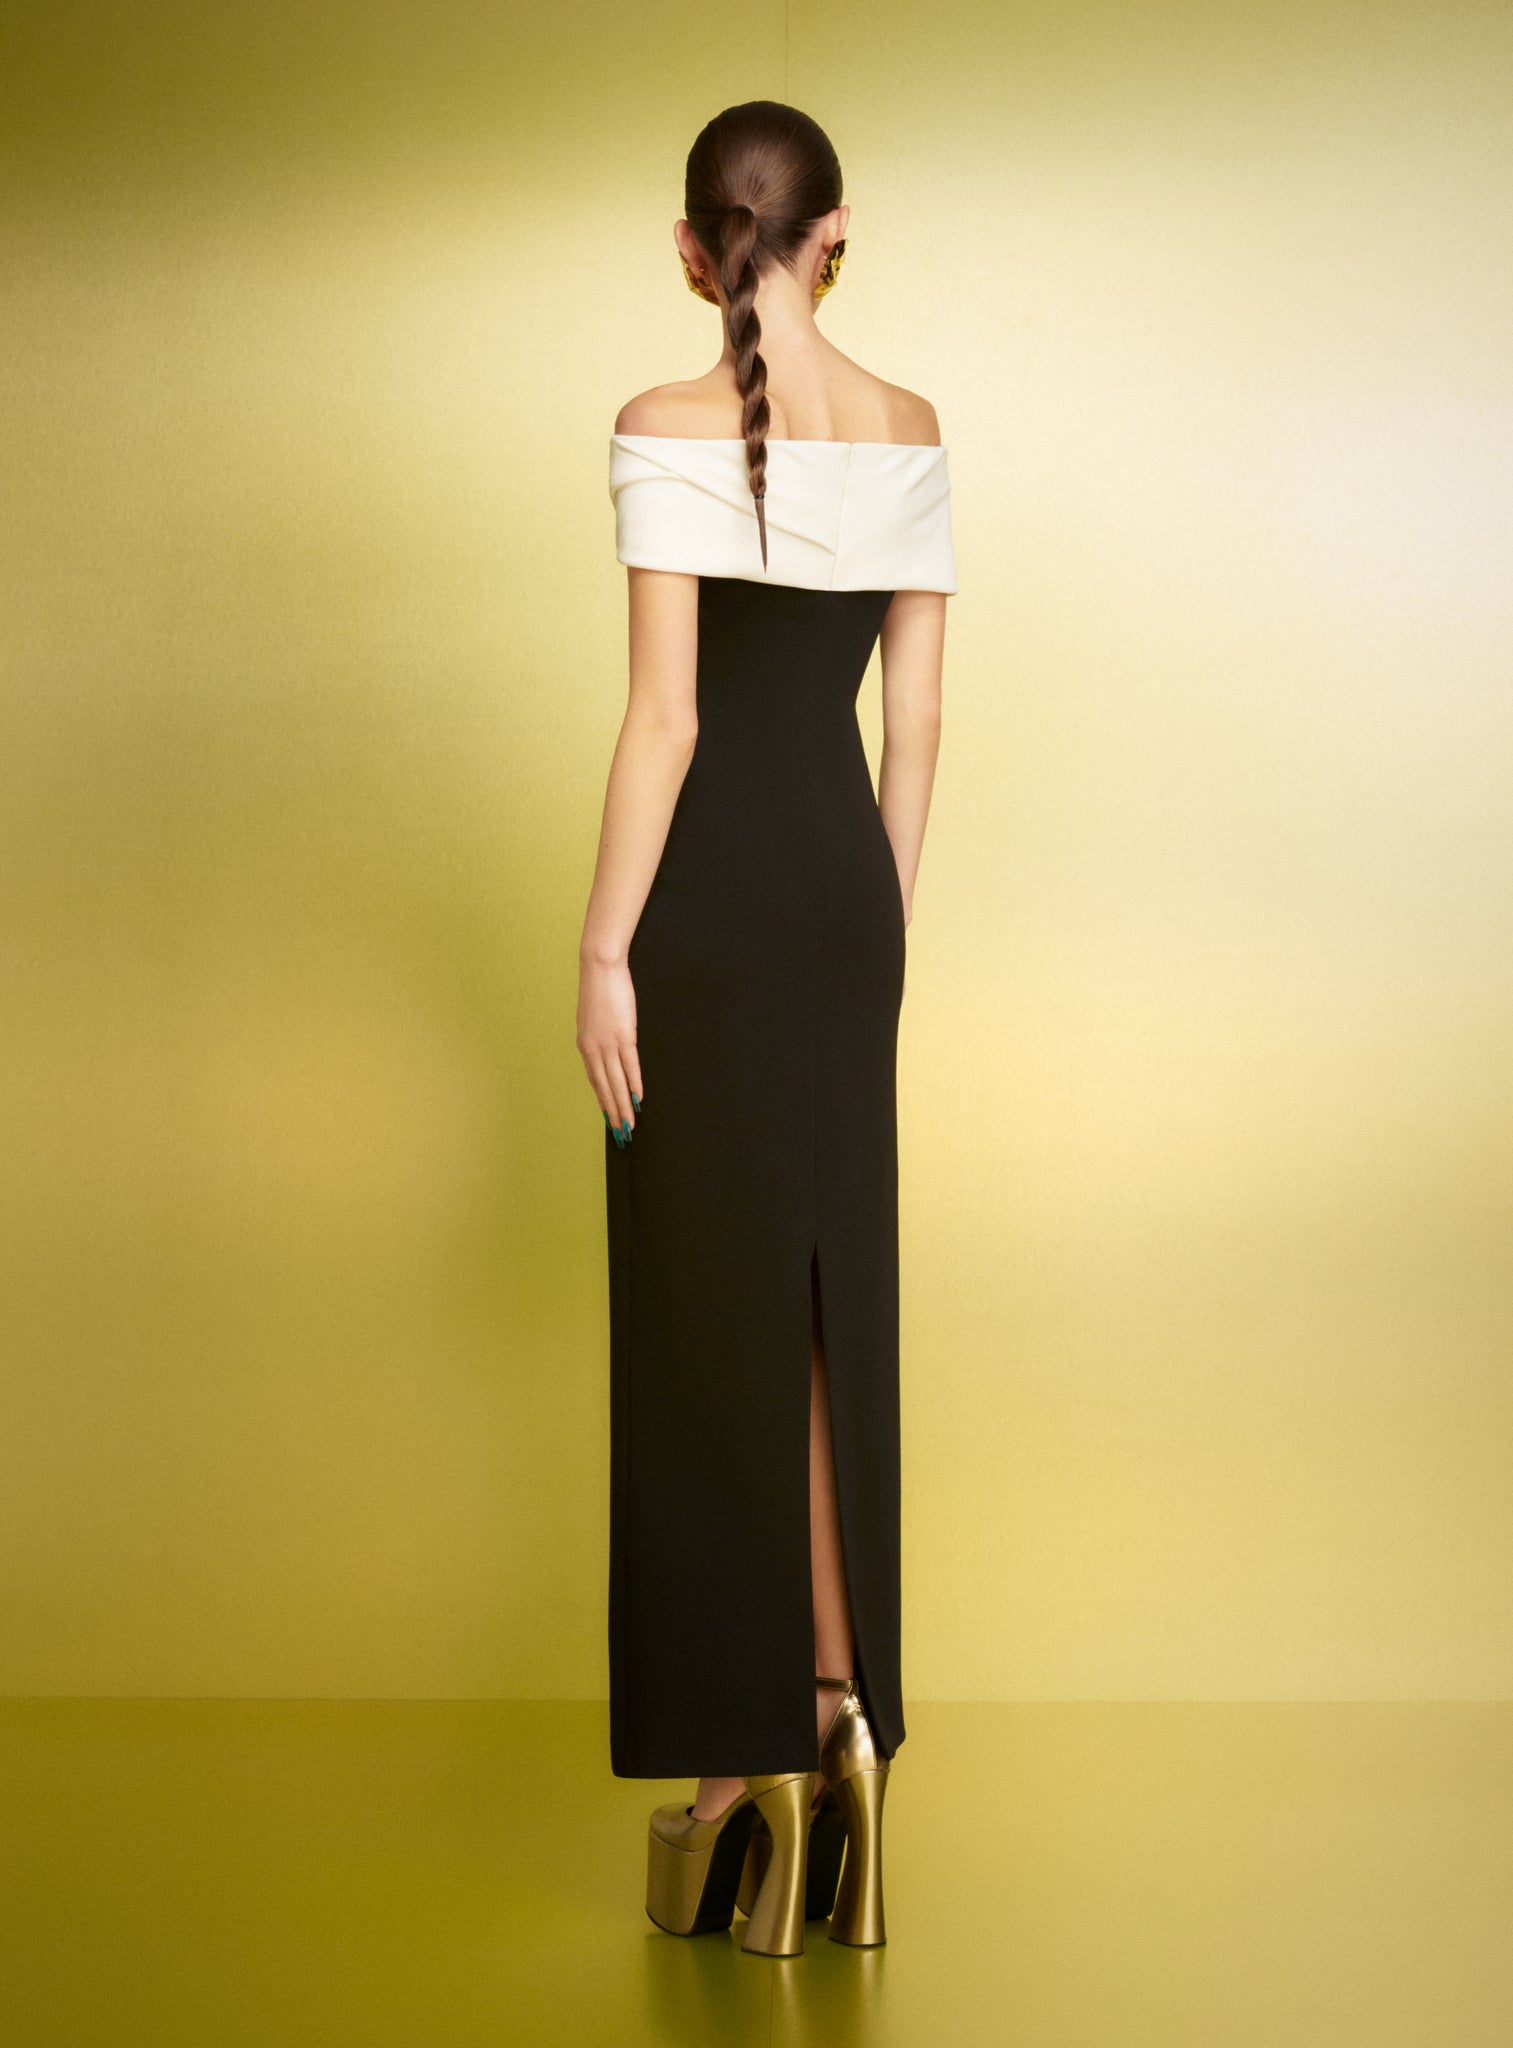 The Eva Maxi Dress in Cream and Black